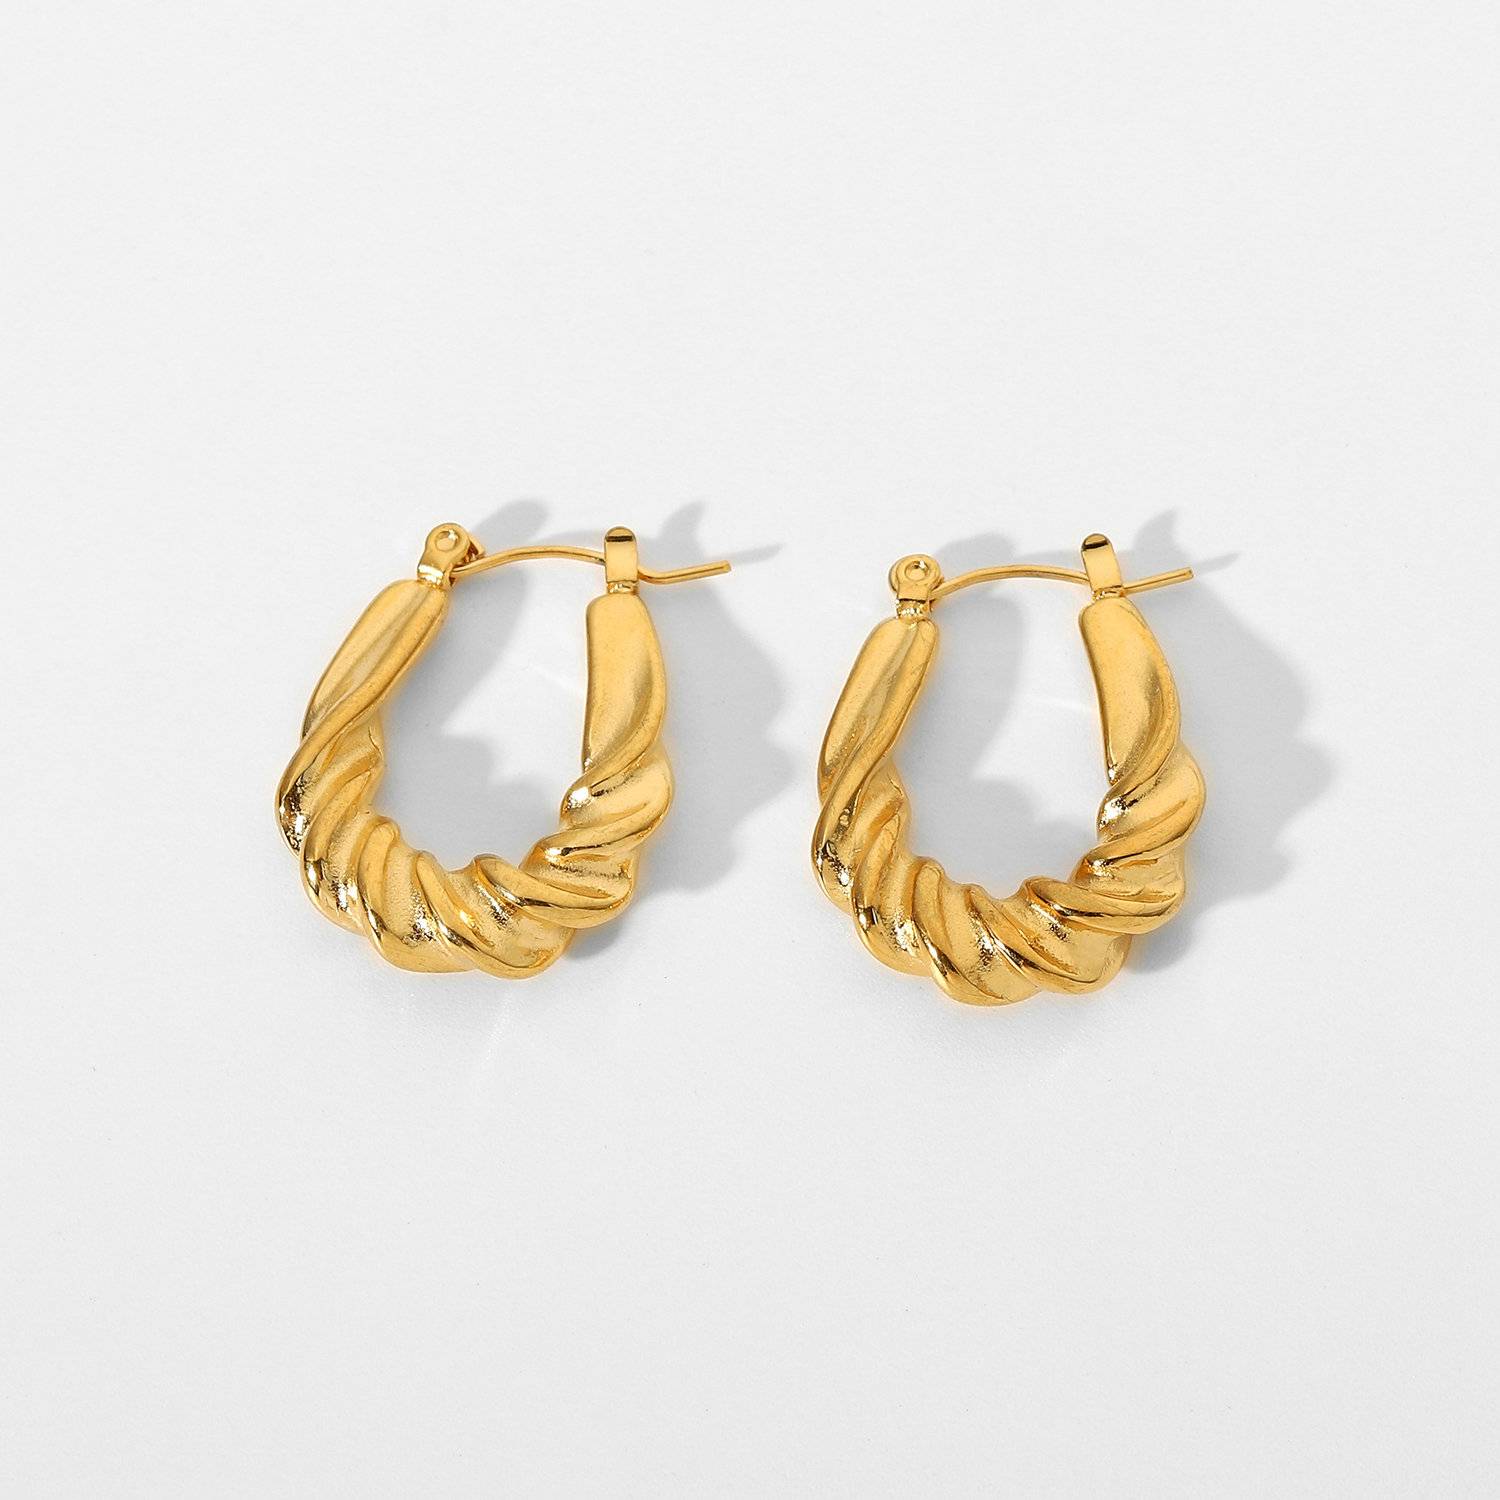 New Fashion Punk Twisted Woven Oval Hoop Earring For Women Waterproof Jewelry 18K Gold Plated Stainless Steel Croissant Earrings